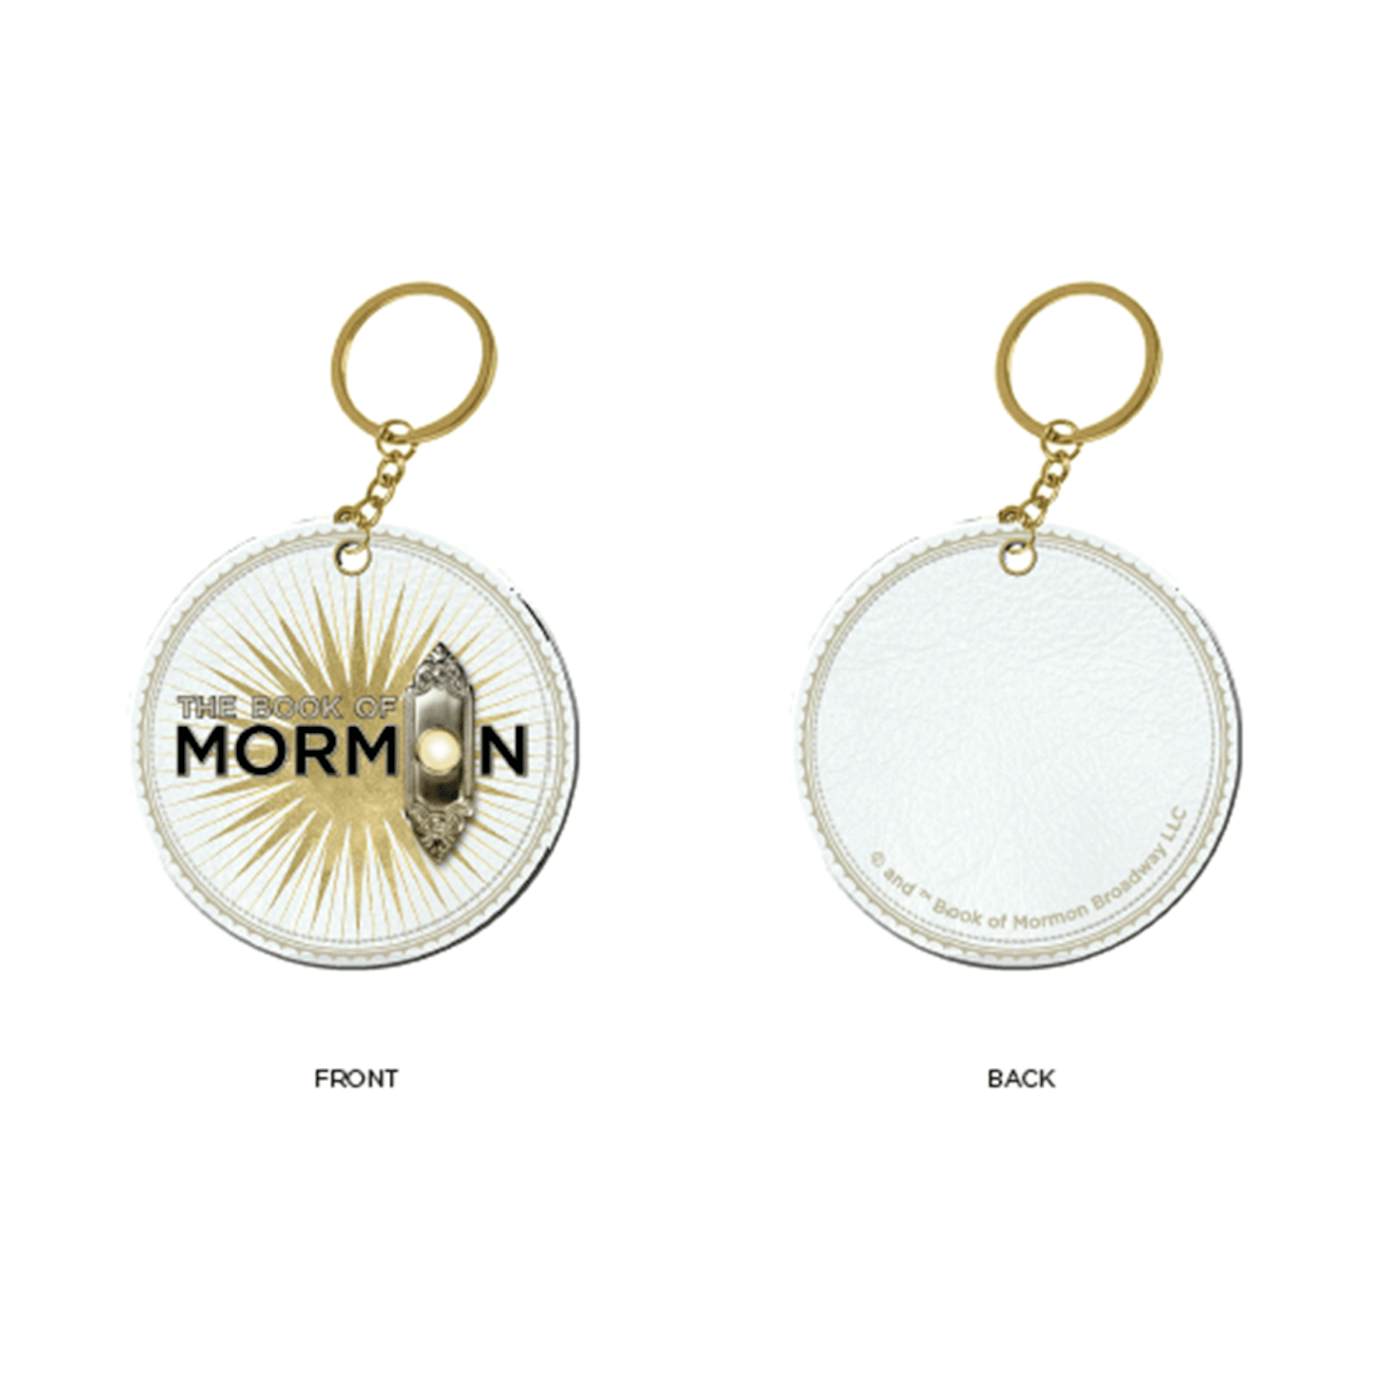 book of mormon uk tour merchandise